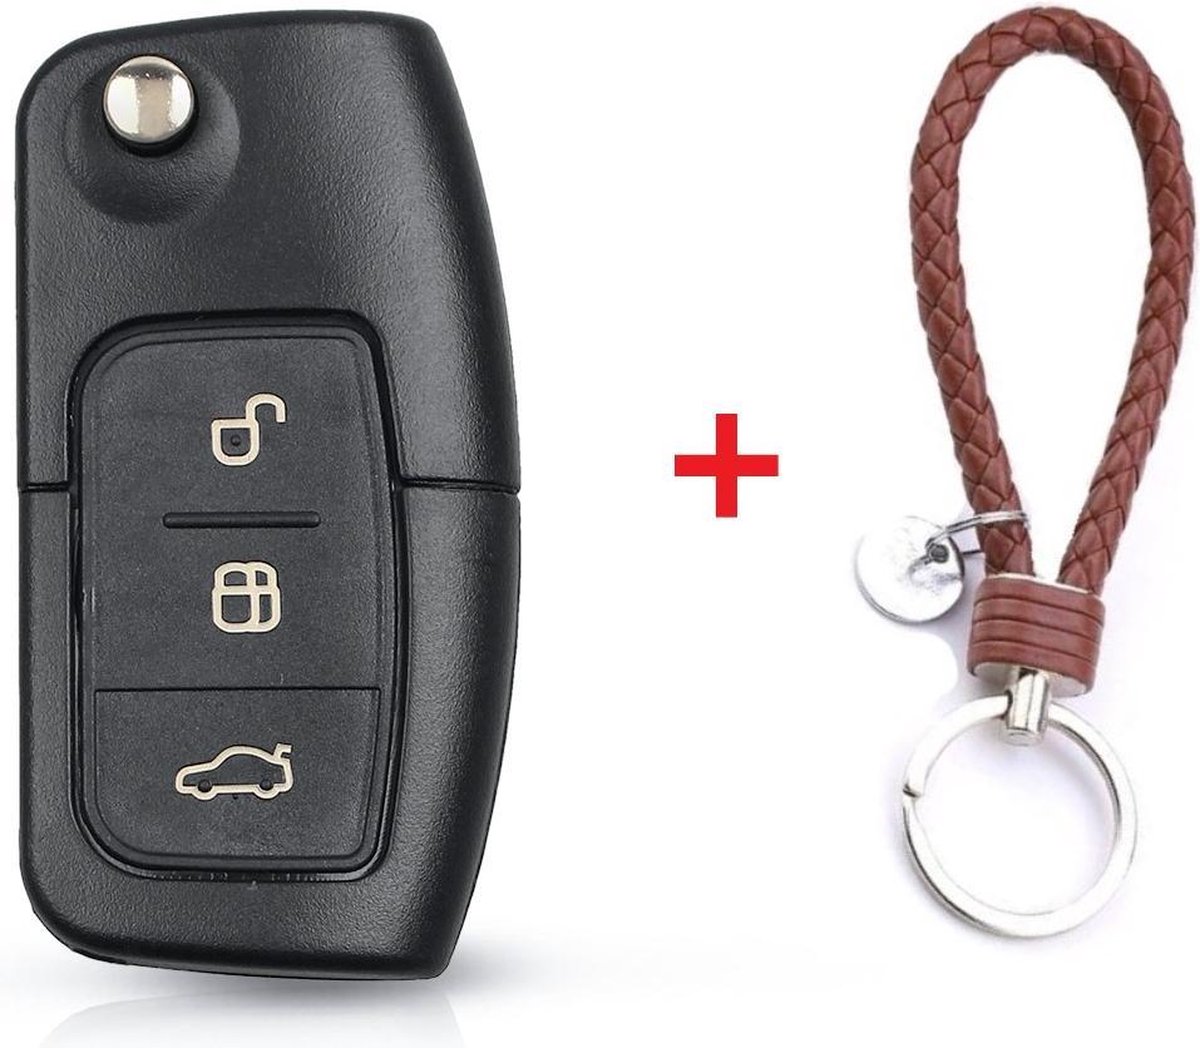 Autosleutel 3 knoppen HU101R10 geschikt voor Ford sleutel / Ford Fiesta / Ford Focus / C-Max / MK4 Galaxy / Kuga / S-Max / Mondeo / Ford sleutel + gevlochten bruin PU-lederen sleutelhanger. - Merkloos